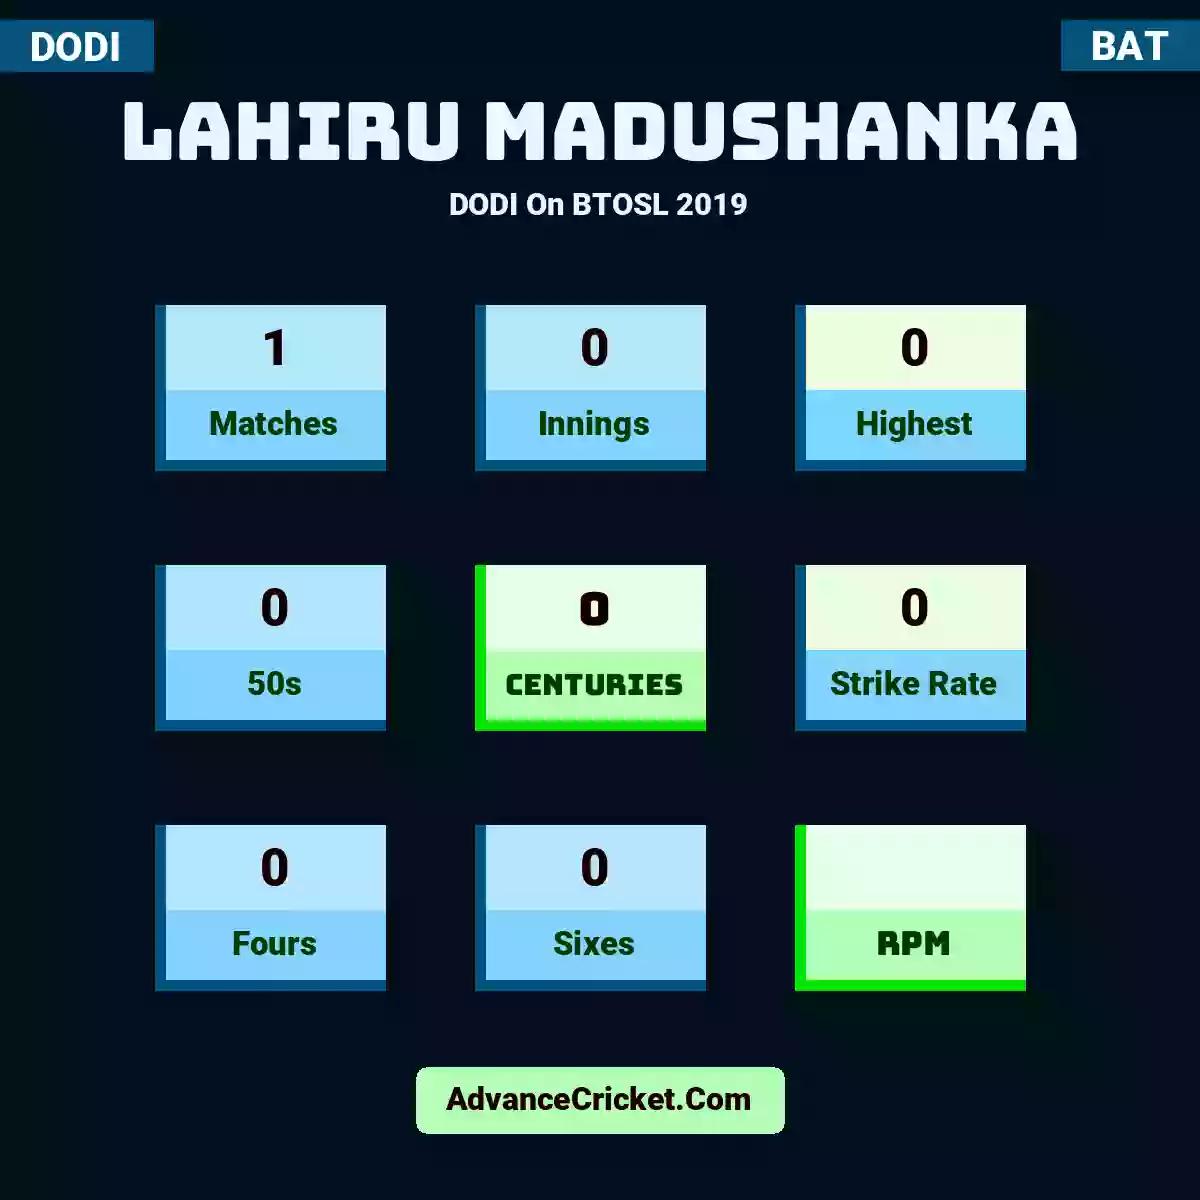 Lahiru Madushanka DODI  On BTOSL 2019, Lahiru Madushanka played 1 matches, scored 0 runs as highest, 0 half-centuries, and 0 centuries, with a strike rate of 0. L.Madushanka hit 0 fours and 0 sixes.